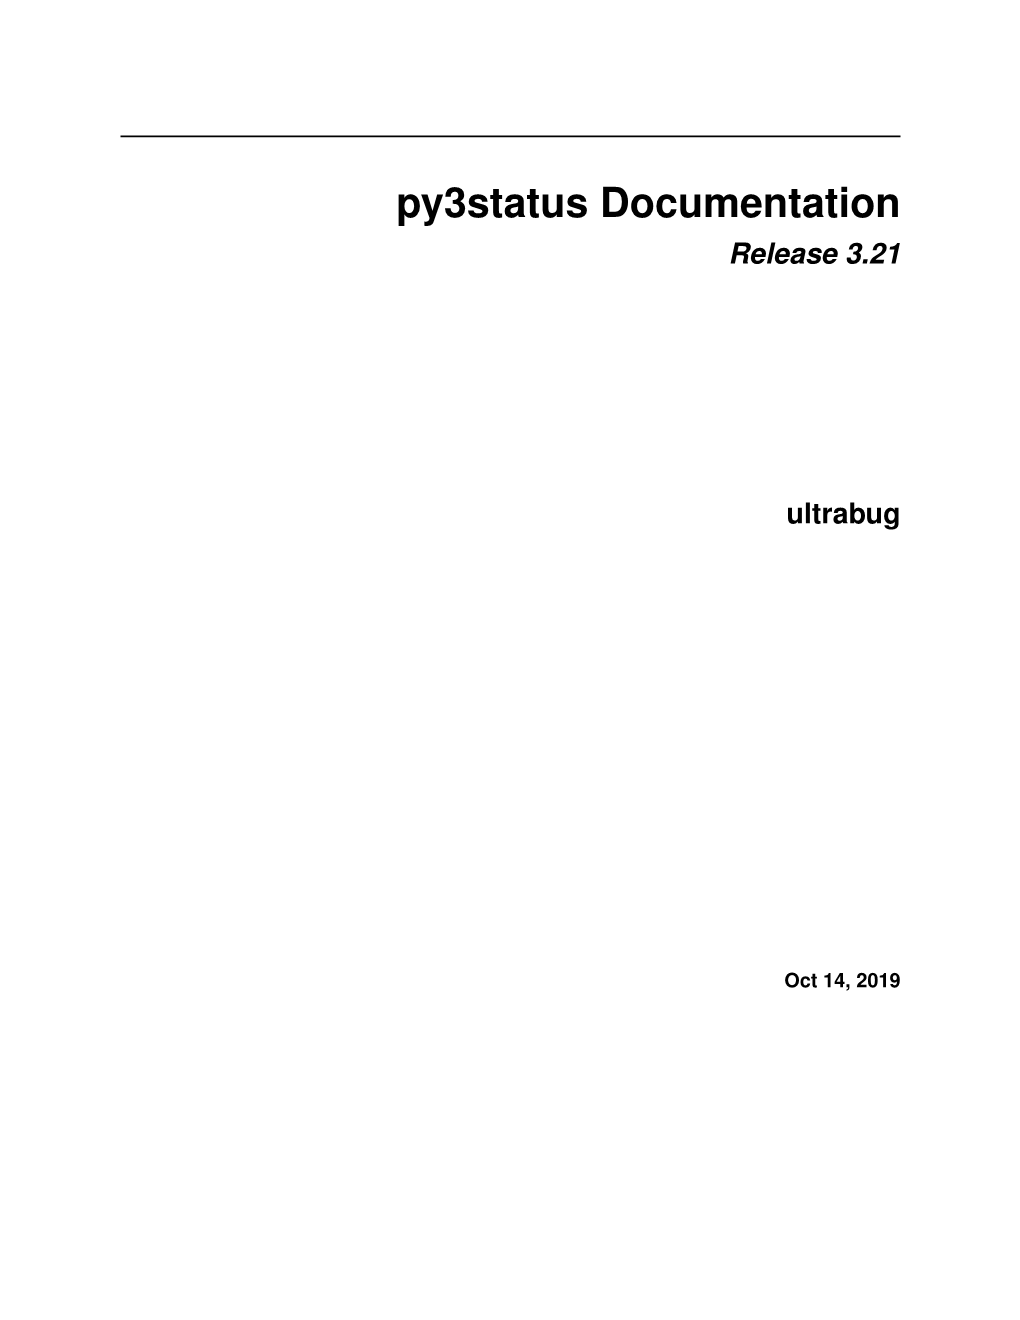 Py3status Documentation Release 3.21